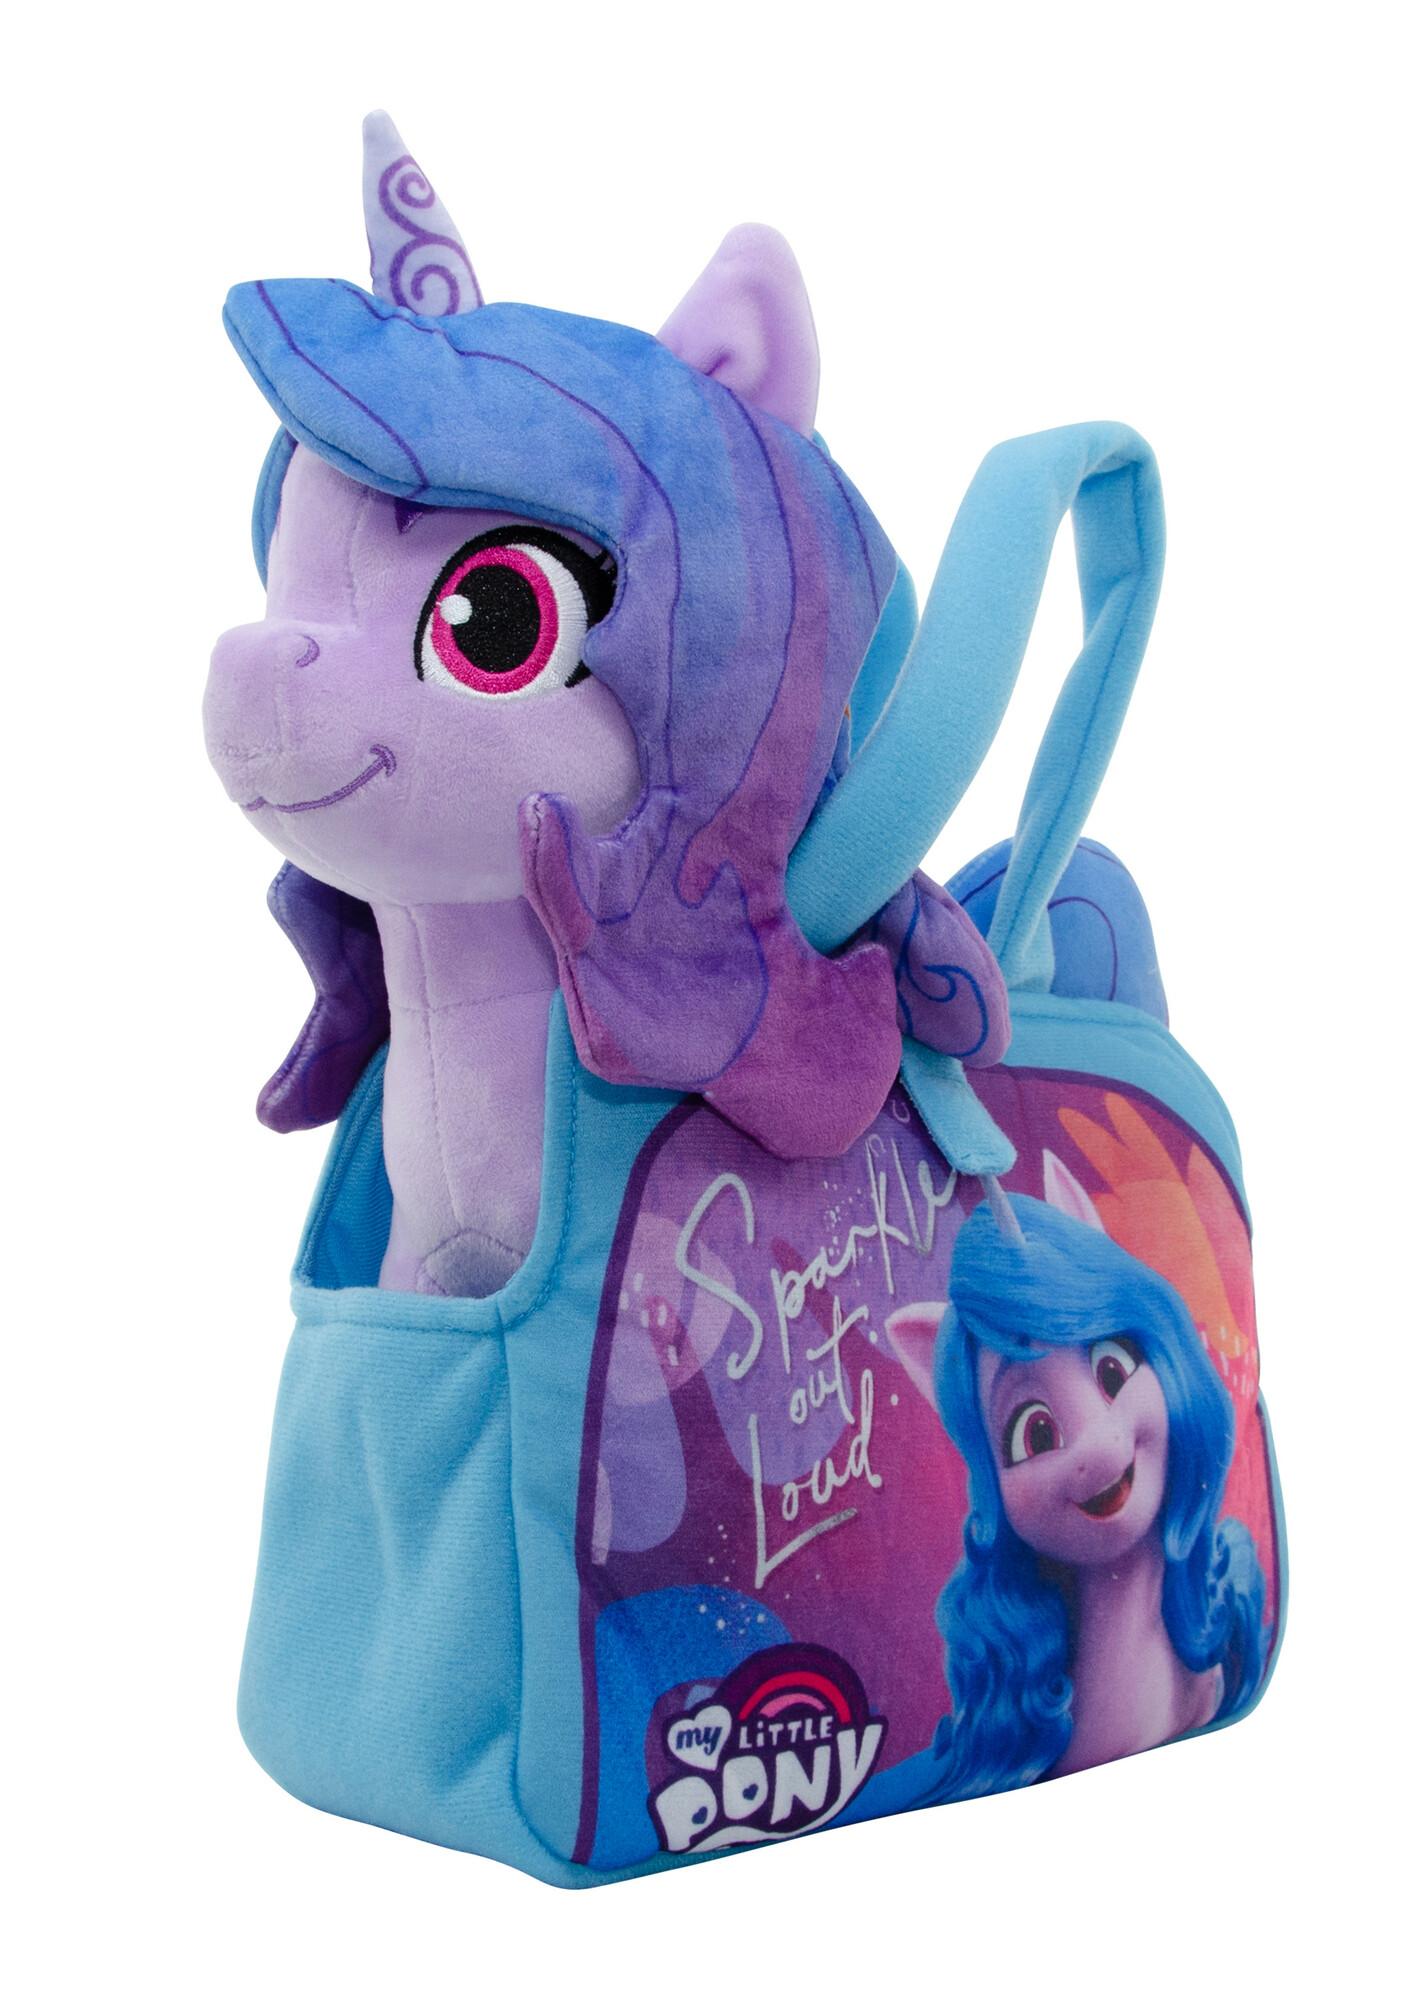 My Little Pony - Plush in Bag - Izzy (33160074)